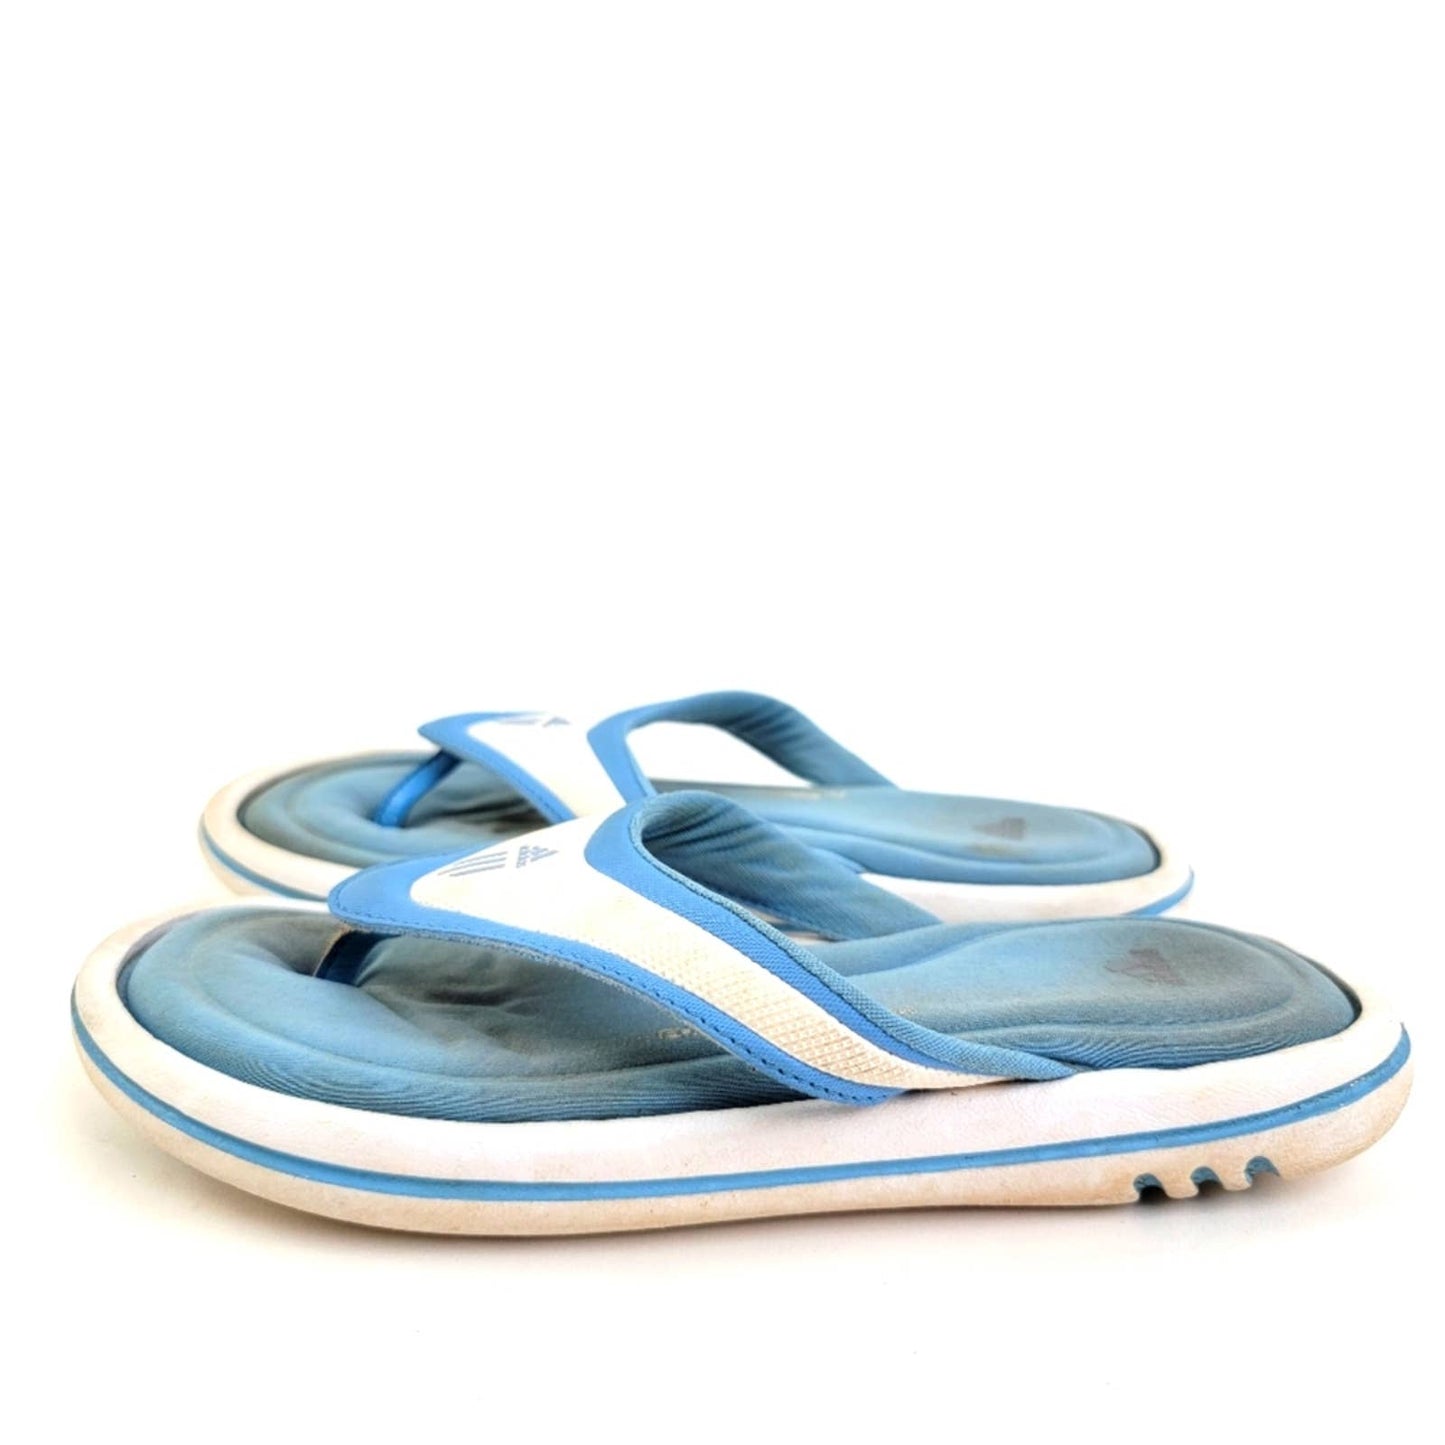 Adidas Comfort Memory Foam Flip Flop Thong Sandals - 5